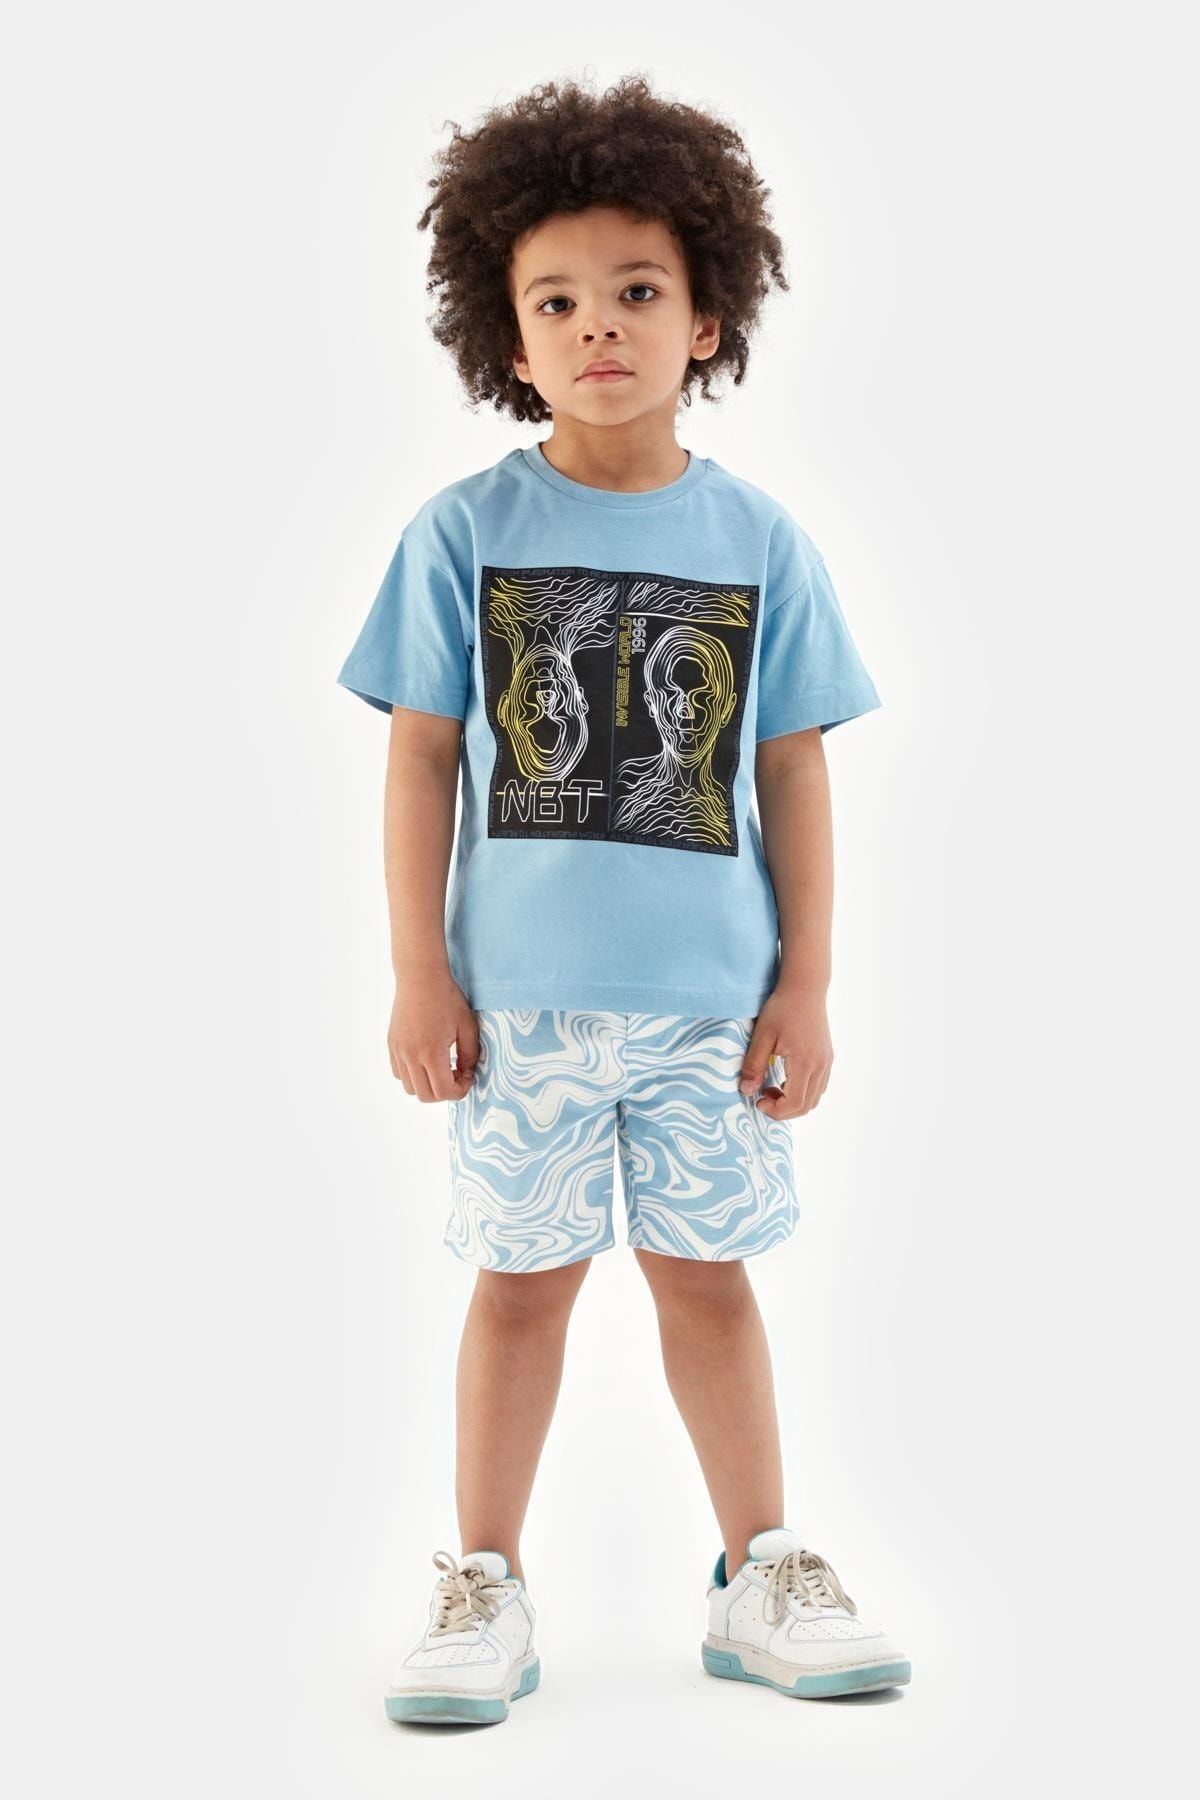 Nebbati Erkek Çocuk Mavi Tshirt 23ss1nb3556